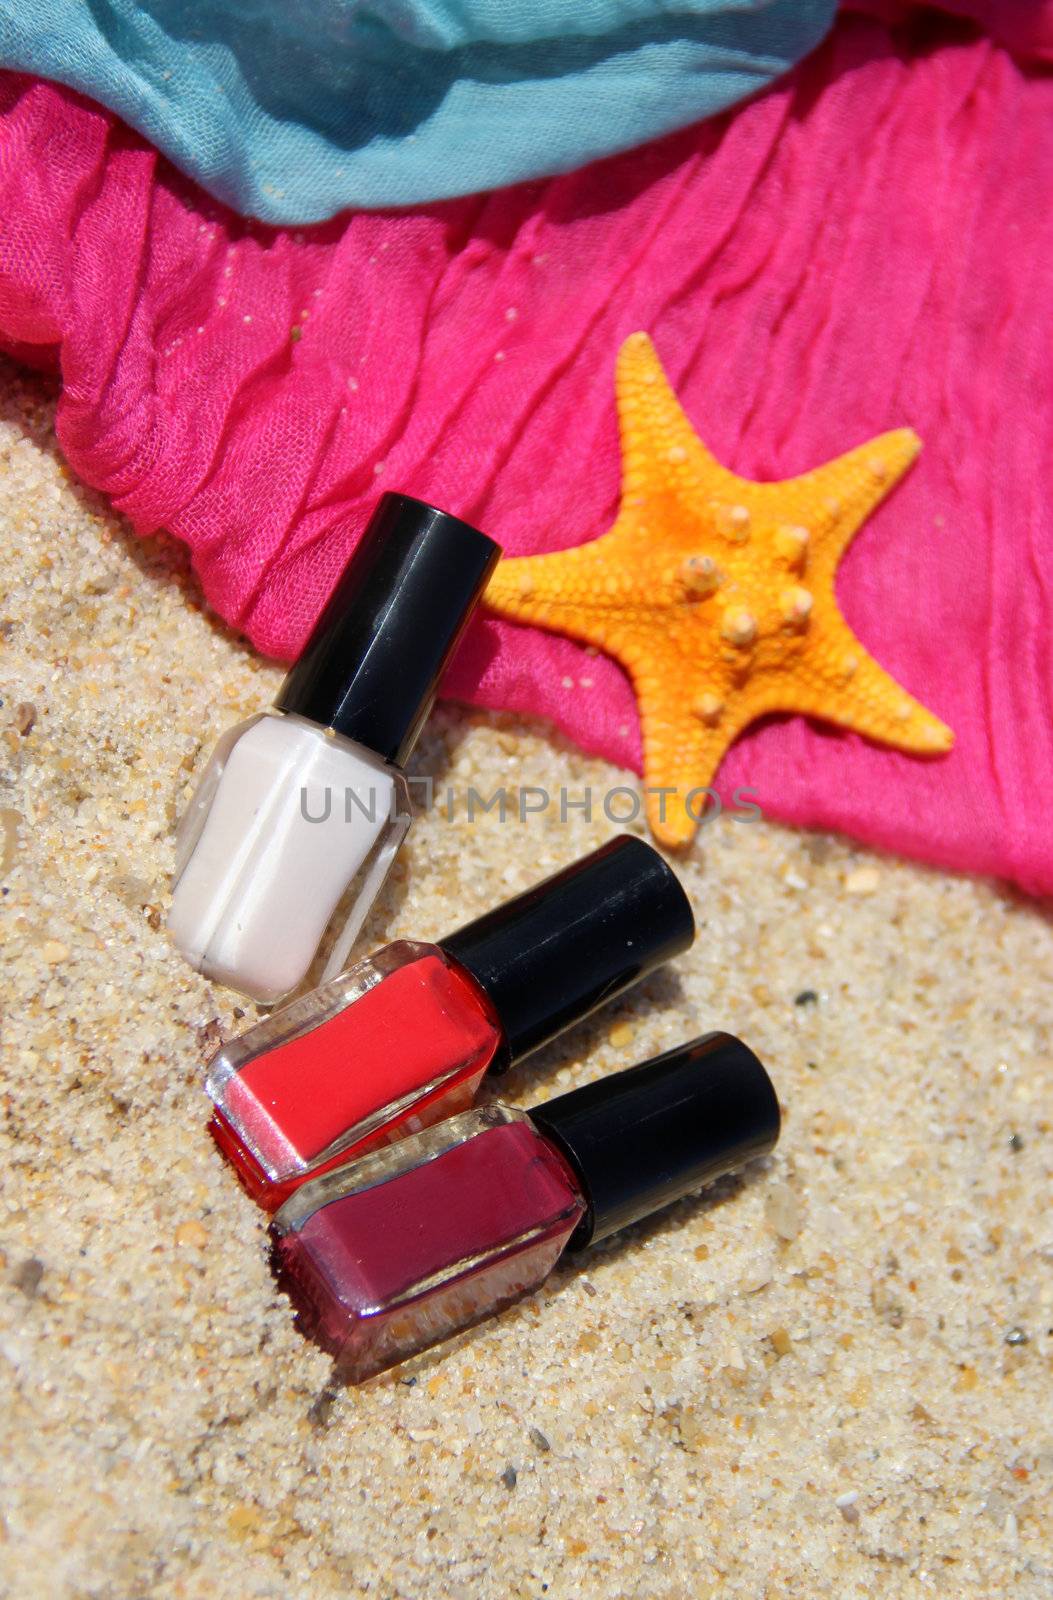 Three nail polish bottle on the beach, scarfs and pink starfish